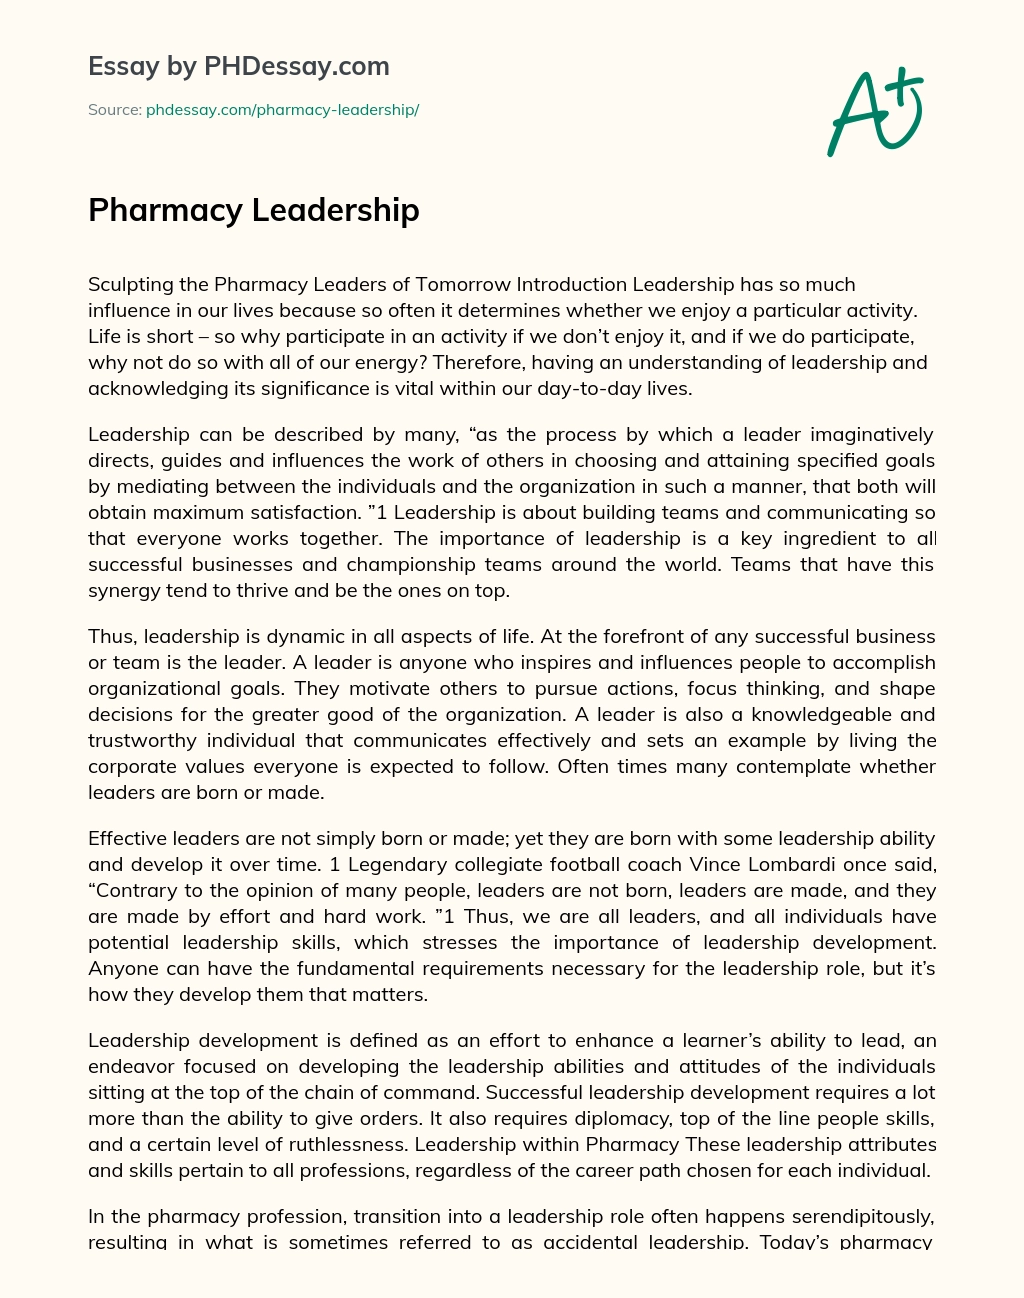 Pharmacy Leadership essay